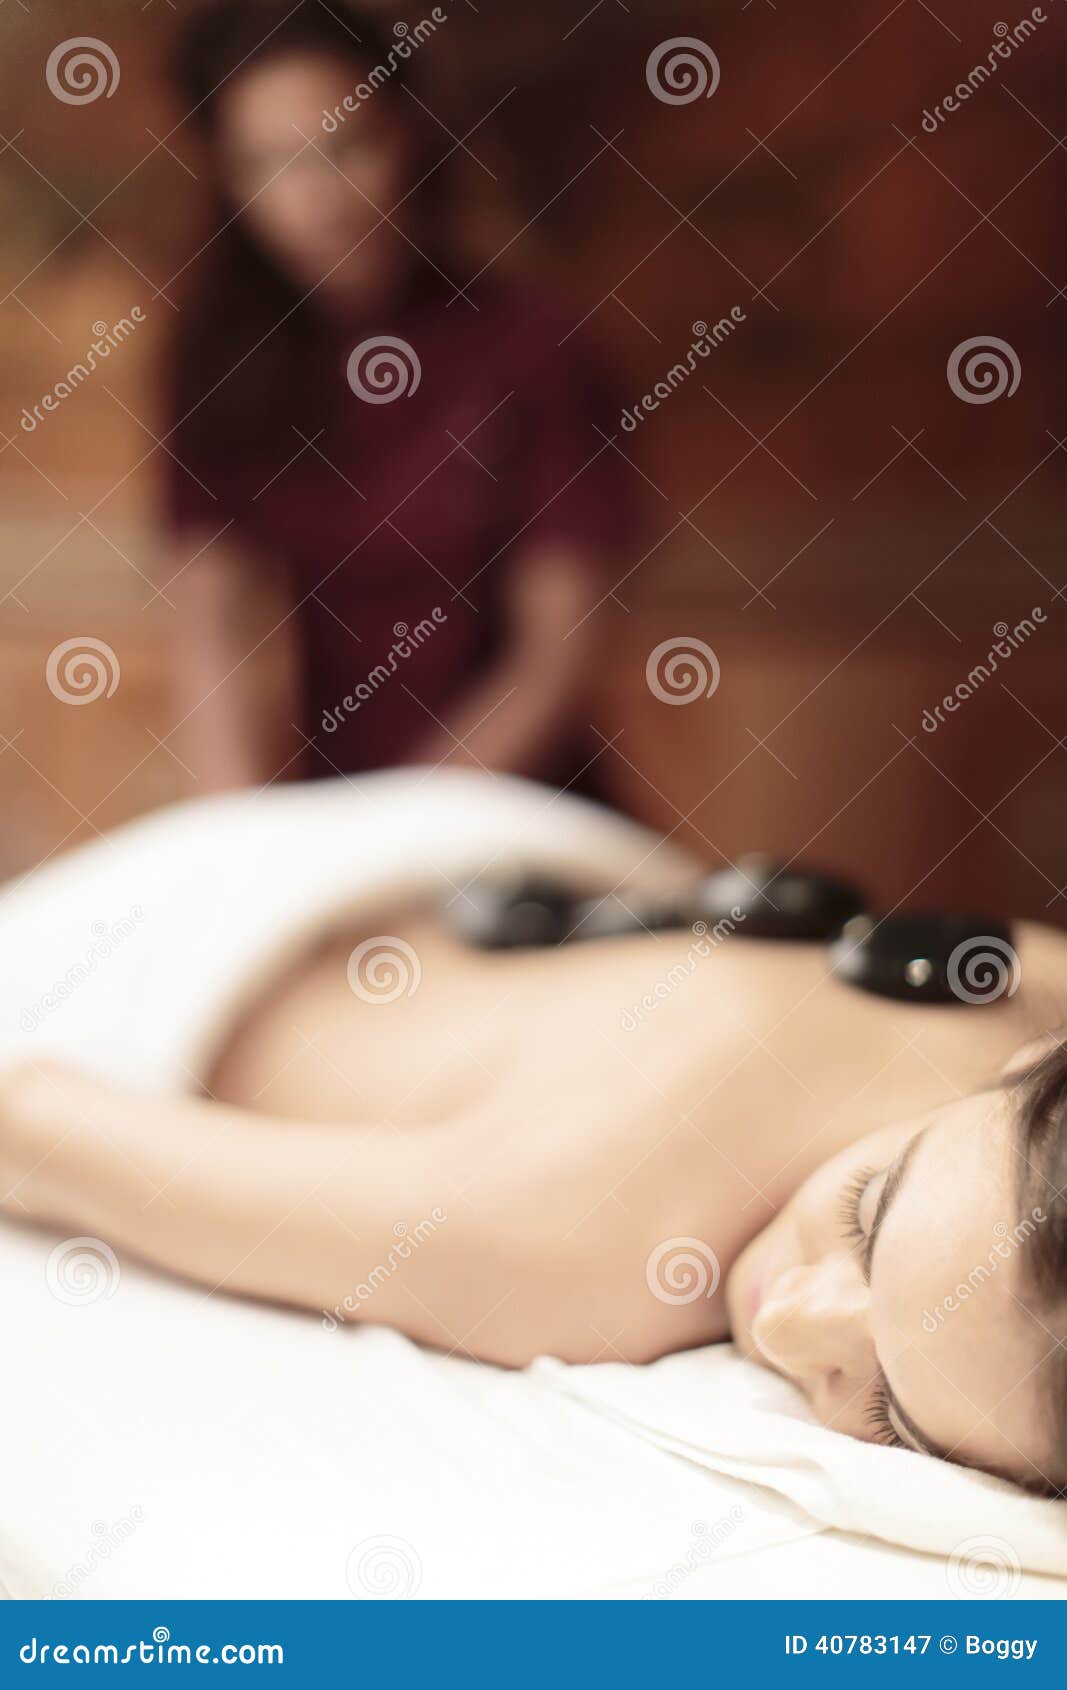 therapist Hot massage